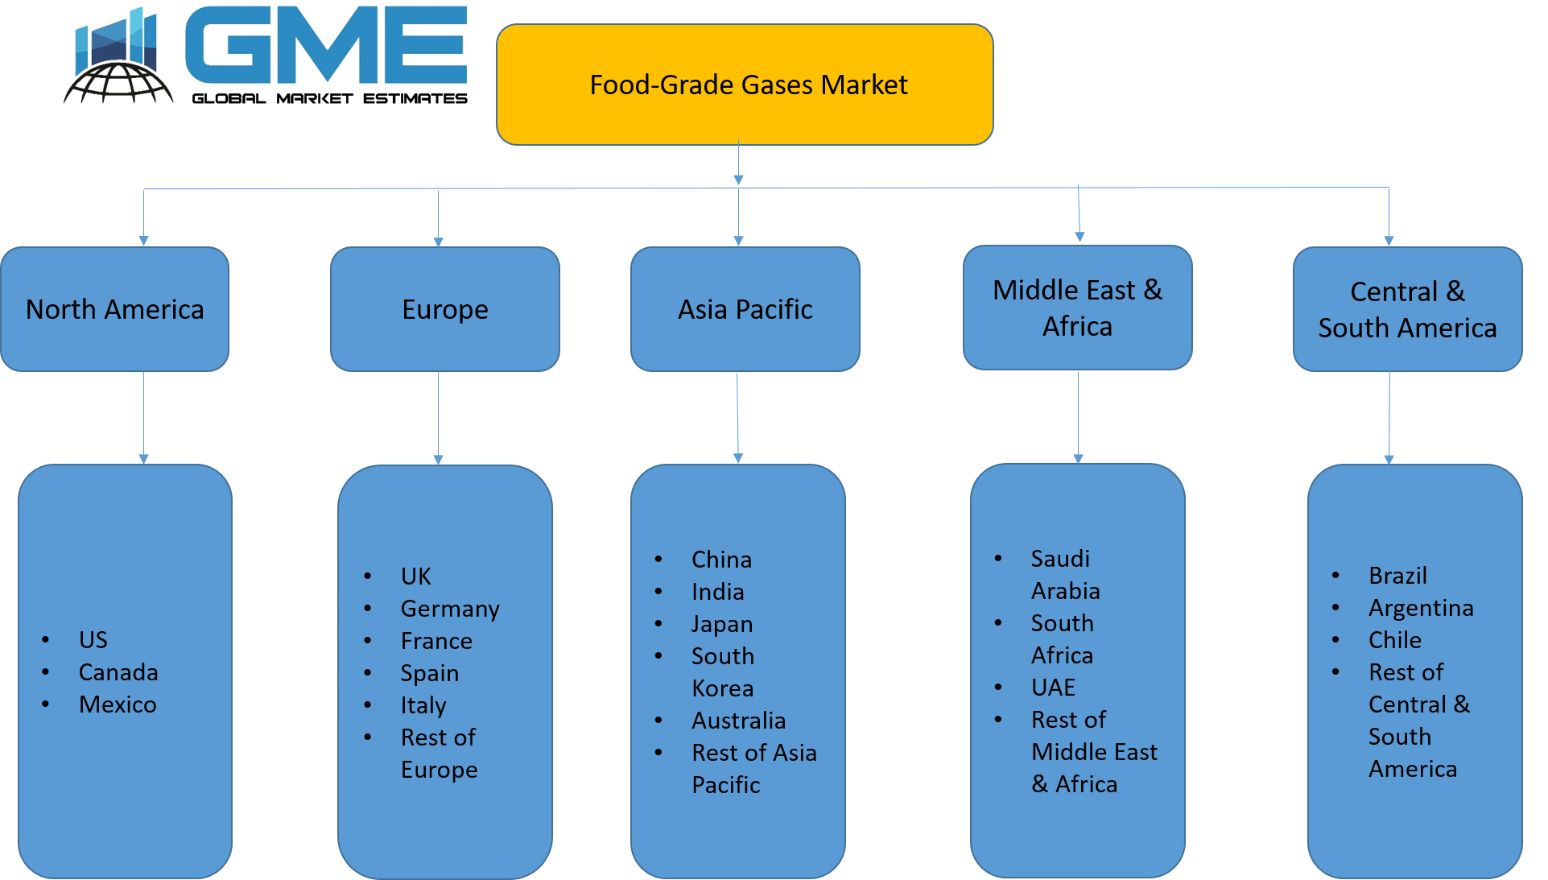 Food-Grade Gases Market - Regional Analysis